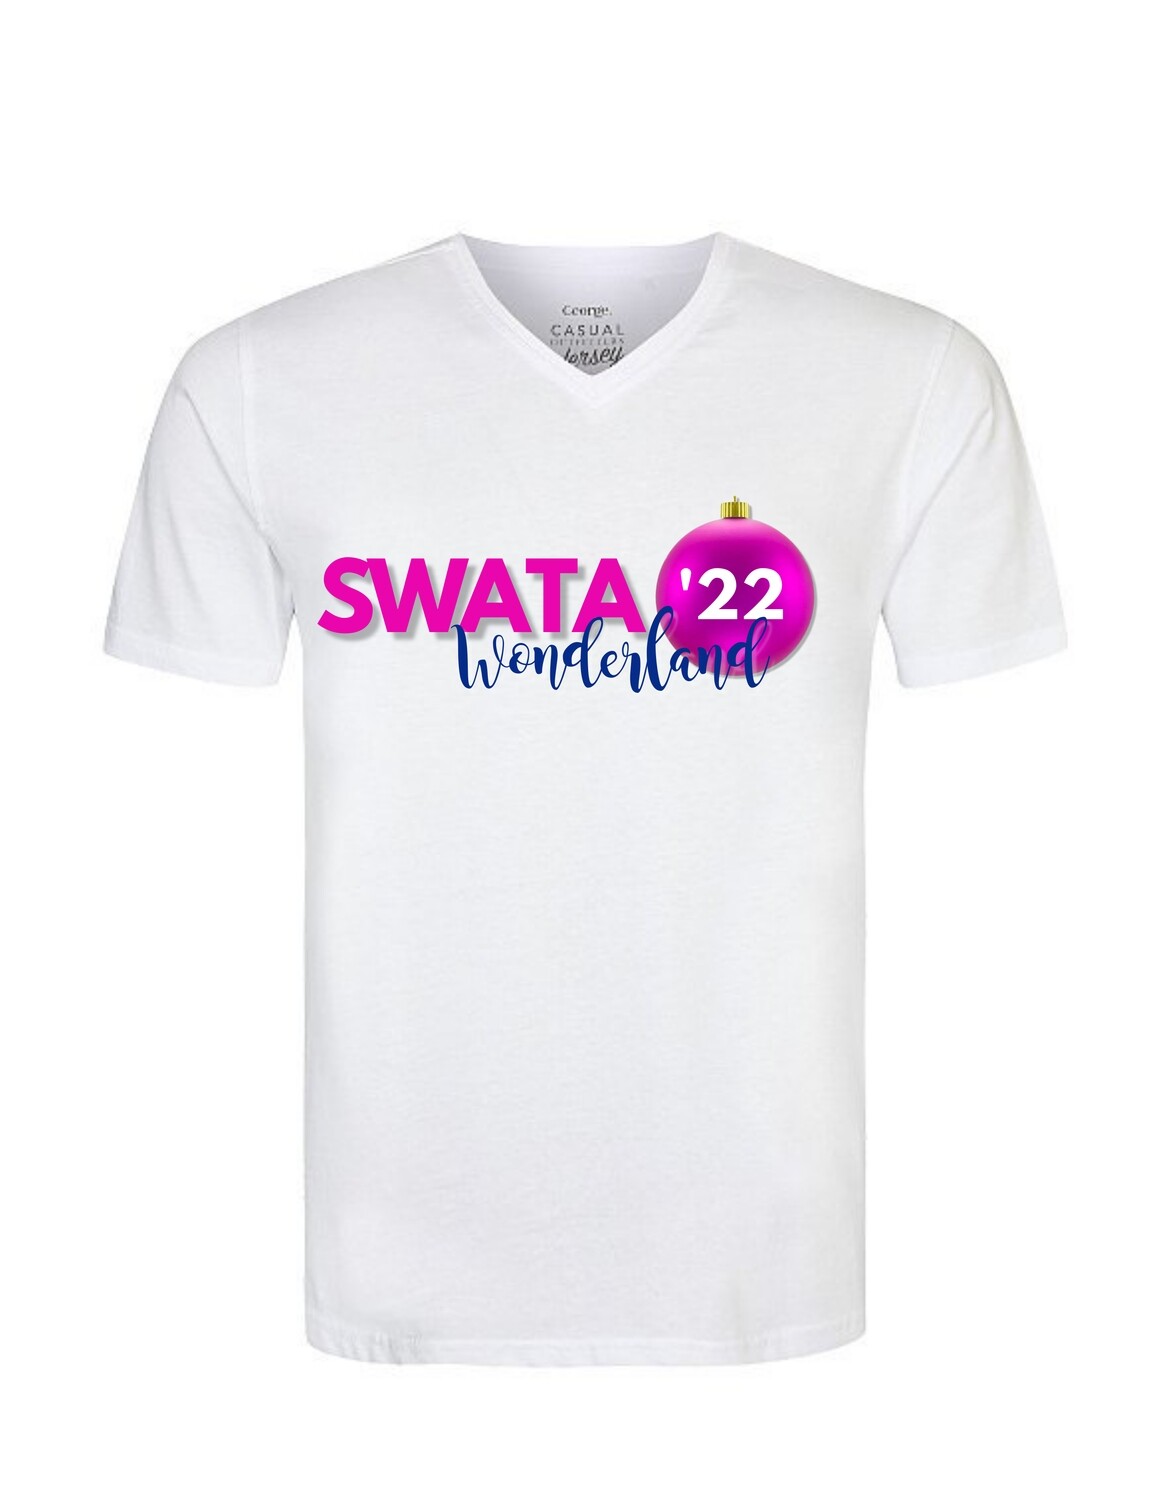 SWATA Wonderland T-shirt